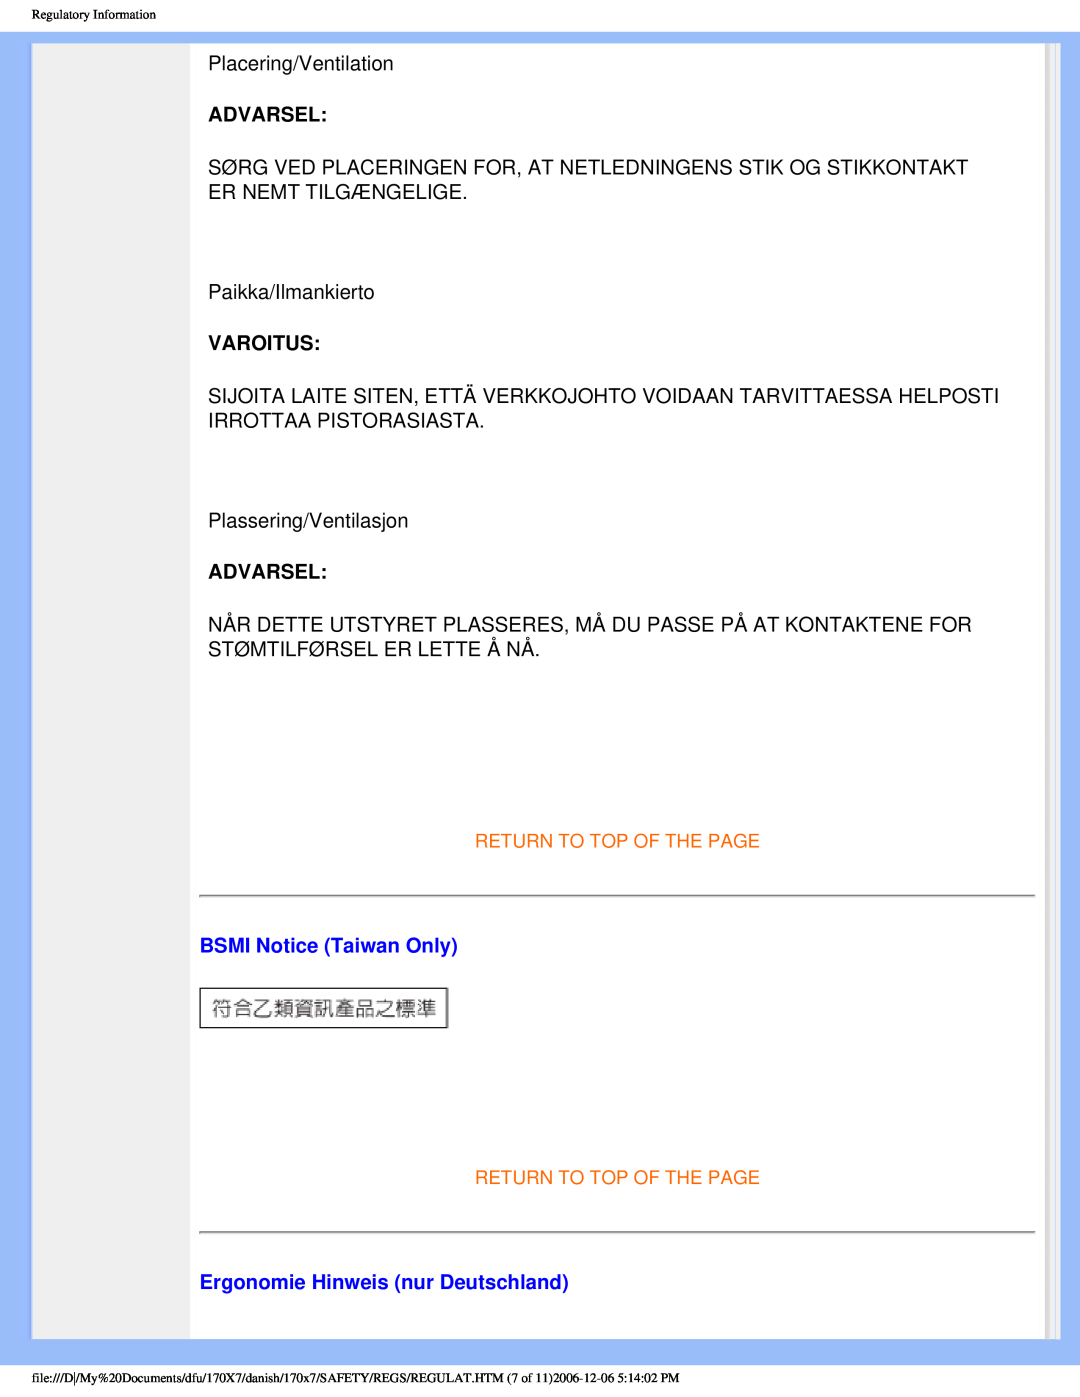 Philips 170x7 user manual Advarsel, Varoitus, BSMI Notice Taiwan Only, Ergonomie Hinweis nur Deutschland 